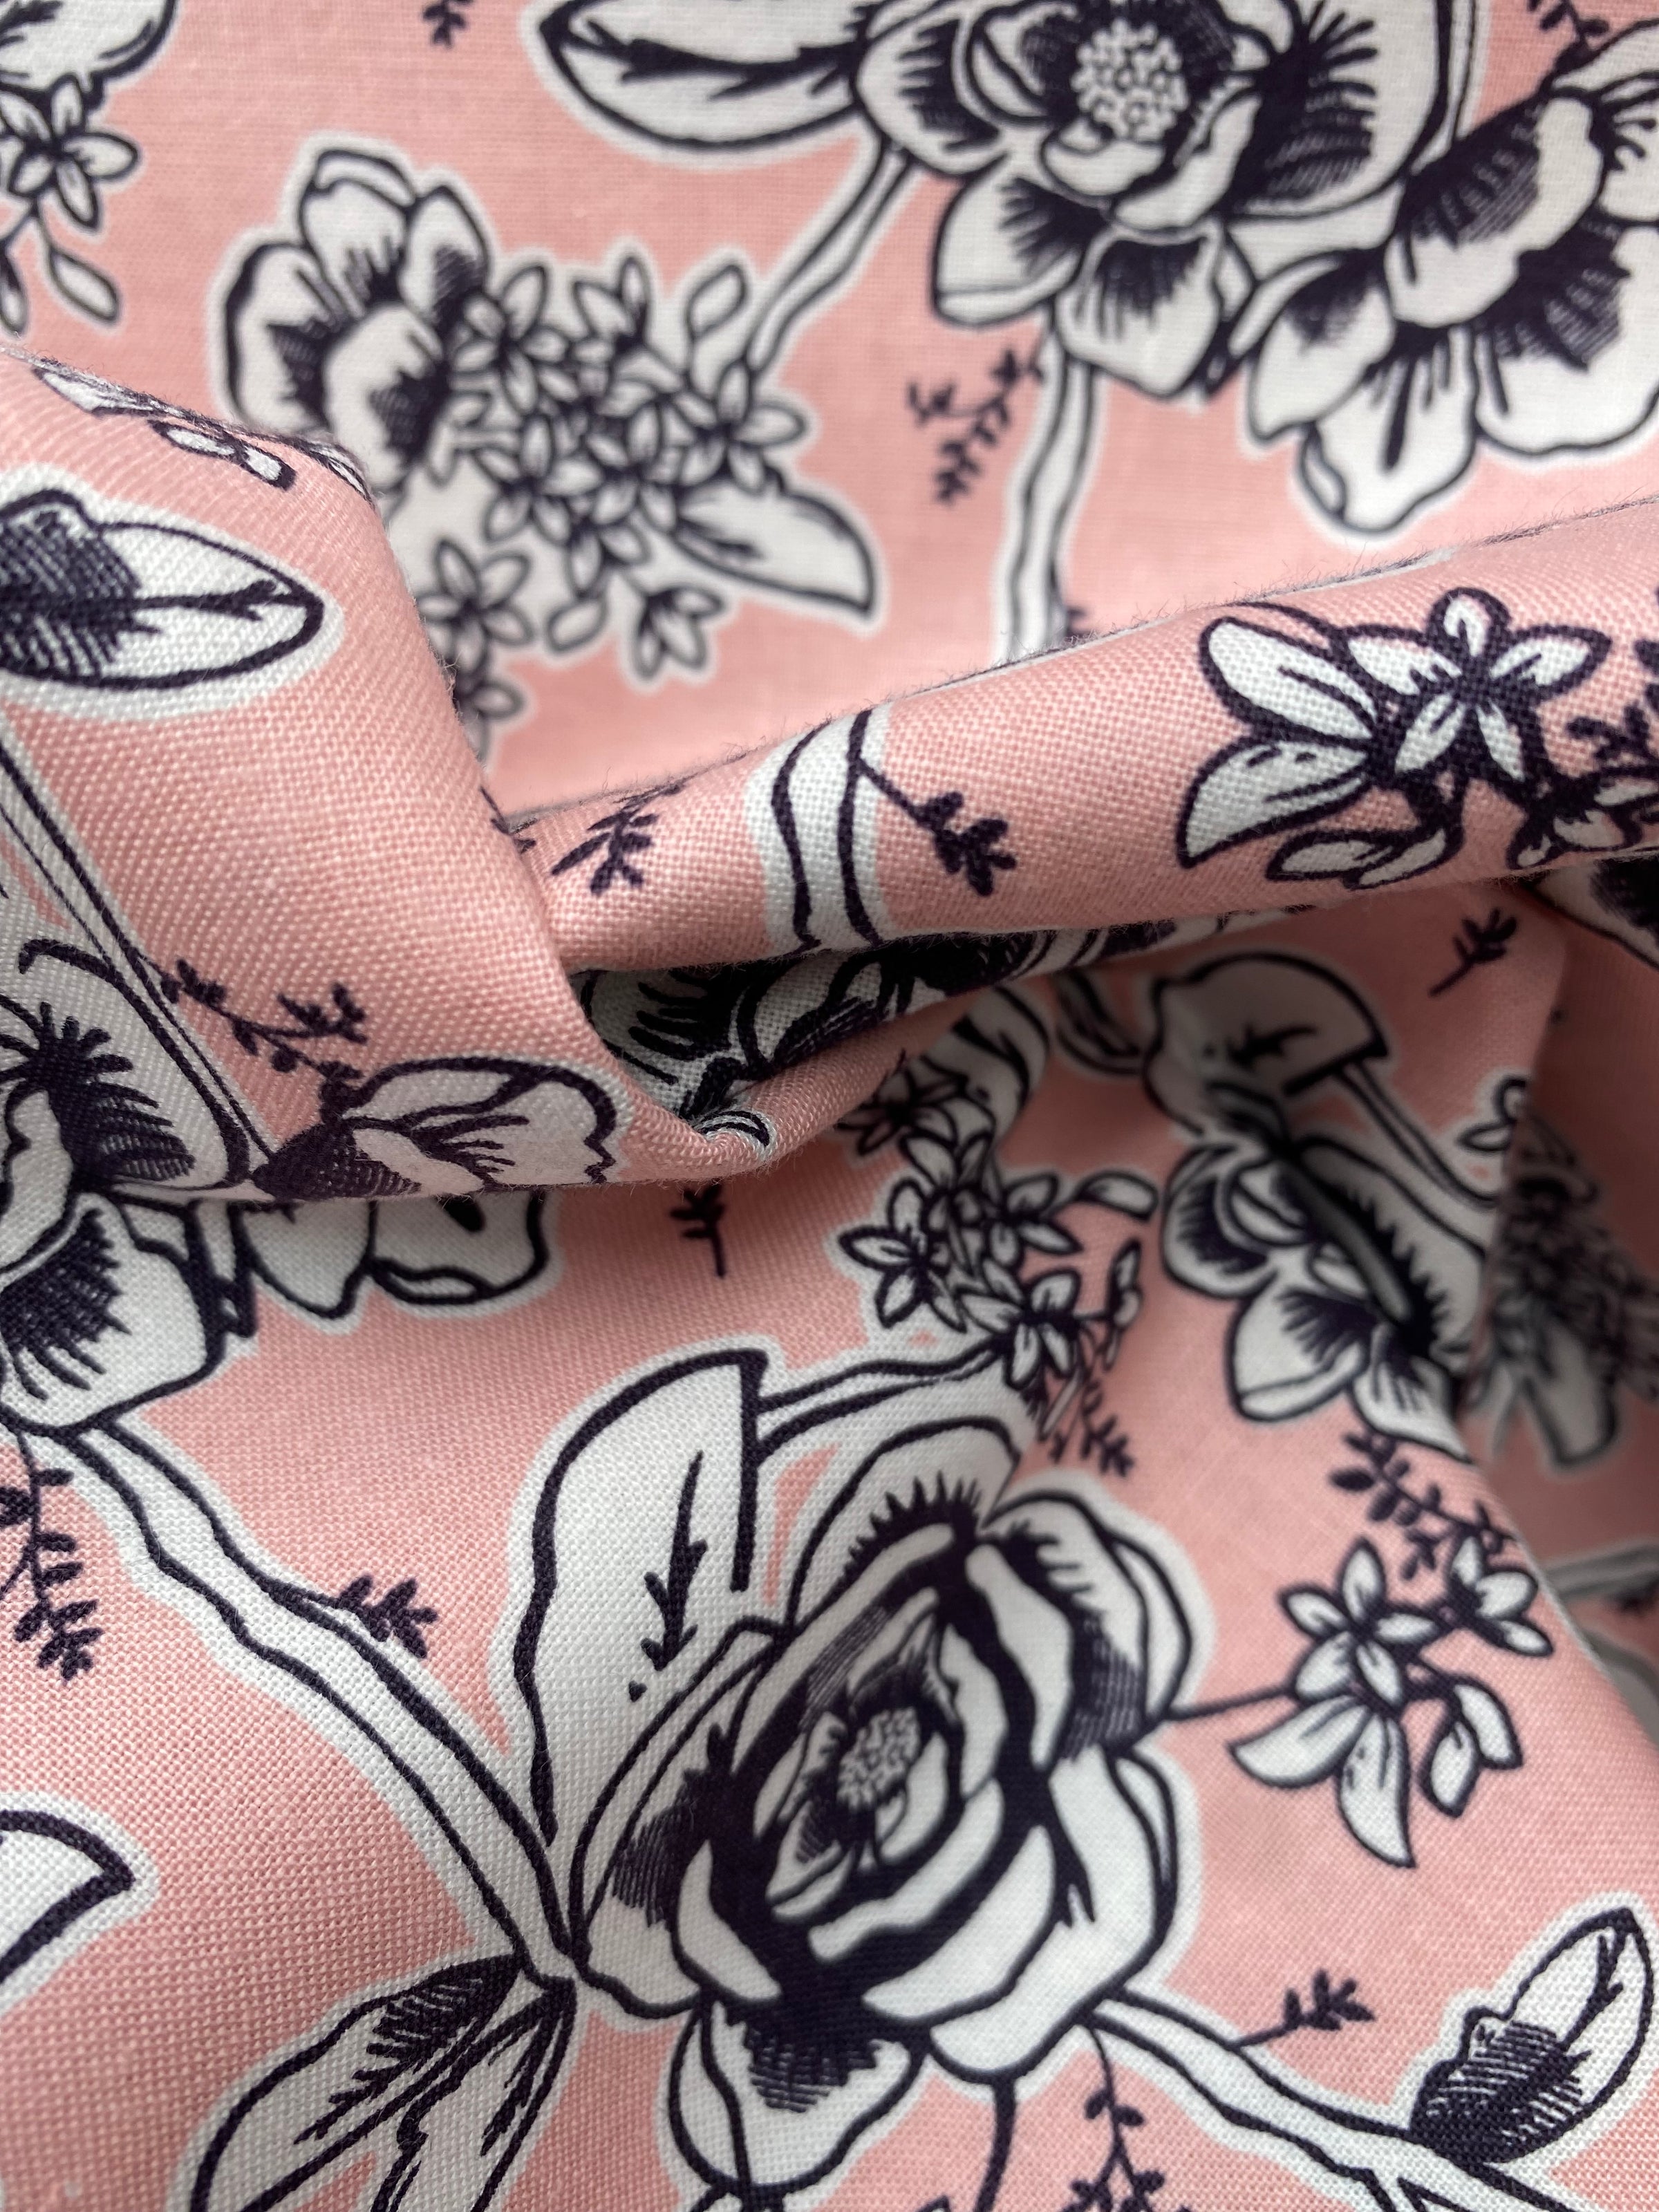 Riley Blake quilting fabric Ciao Bella Blush Floral 1 Yard Bundle 6 Pcs